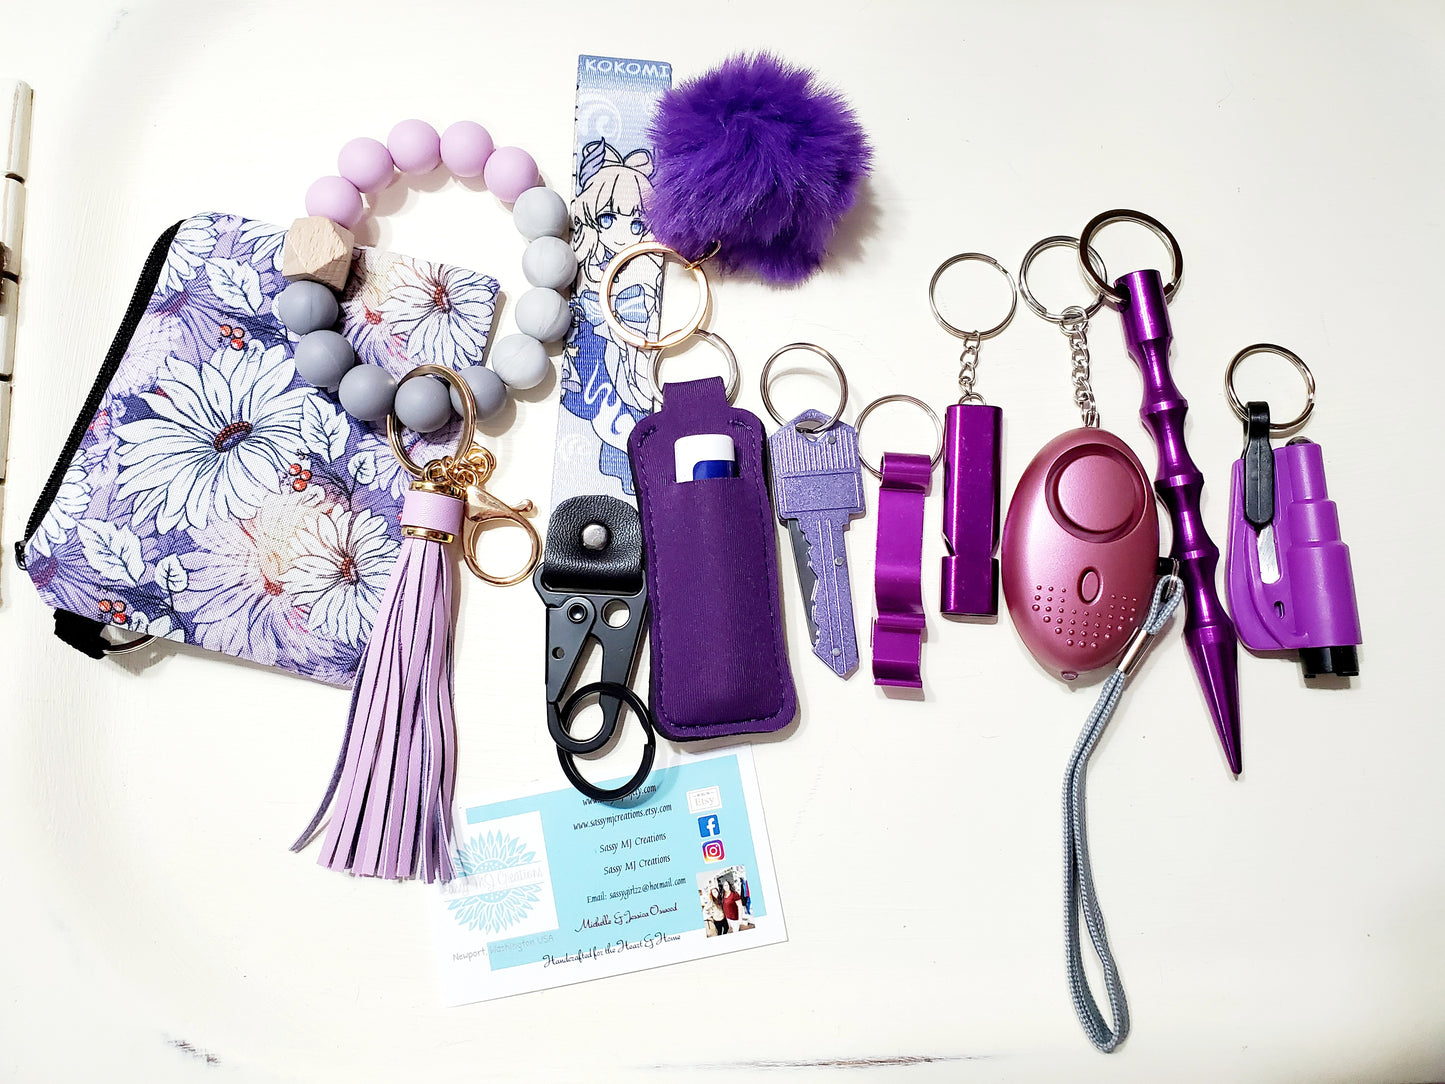 Cartoon Anime Wrist Strap Safety Keychain - Personal Safety Kit 12 pc set - Purple